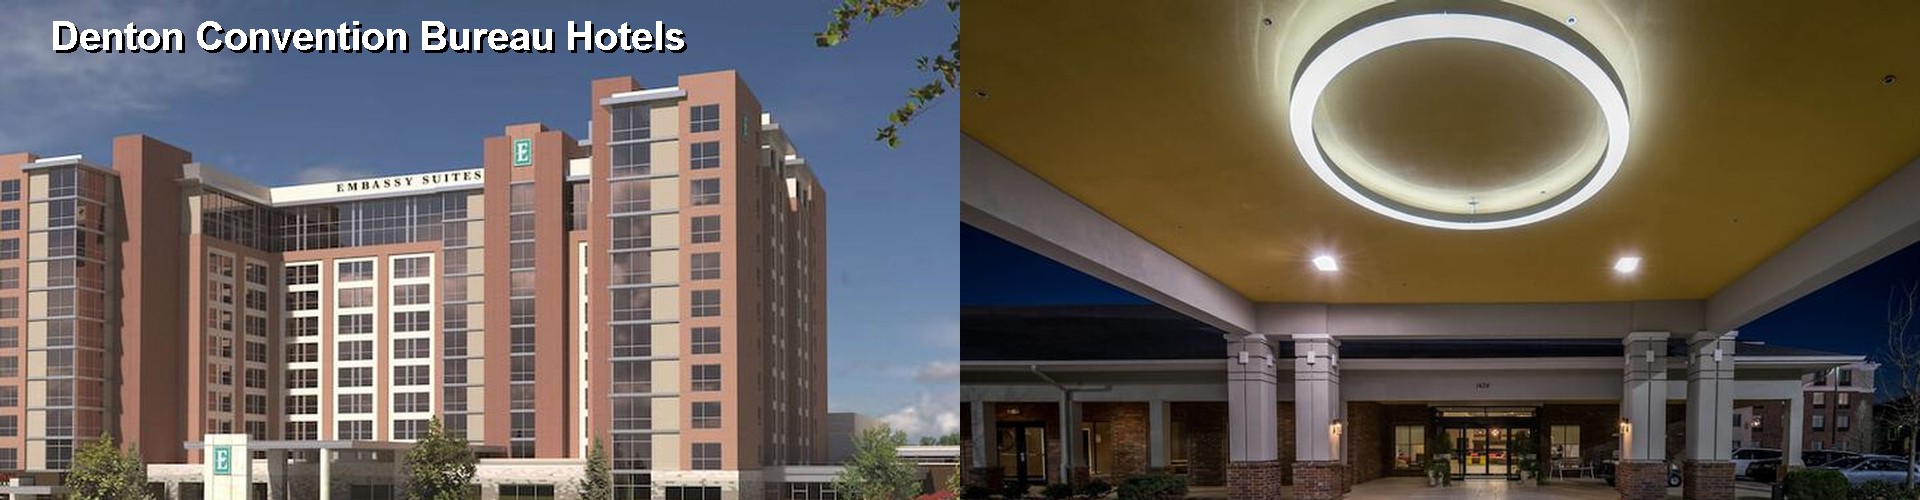 5 Best Hotels near Denton Convention Bureau